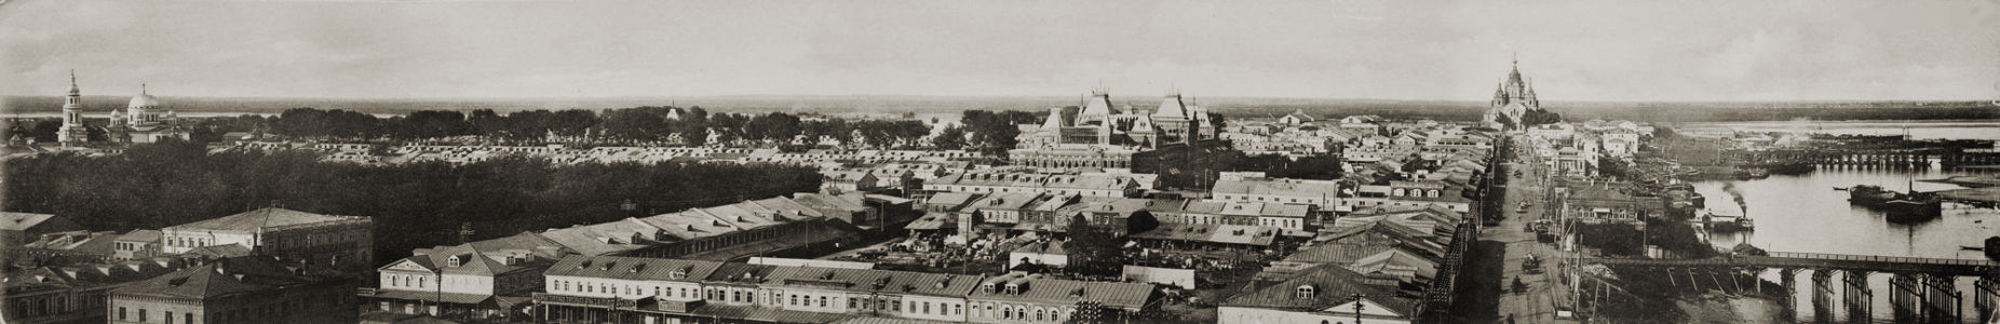 Панорама Нижегородской ярмарки. 1900 г. Фото: М. П. Дмитриев